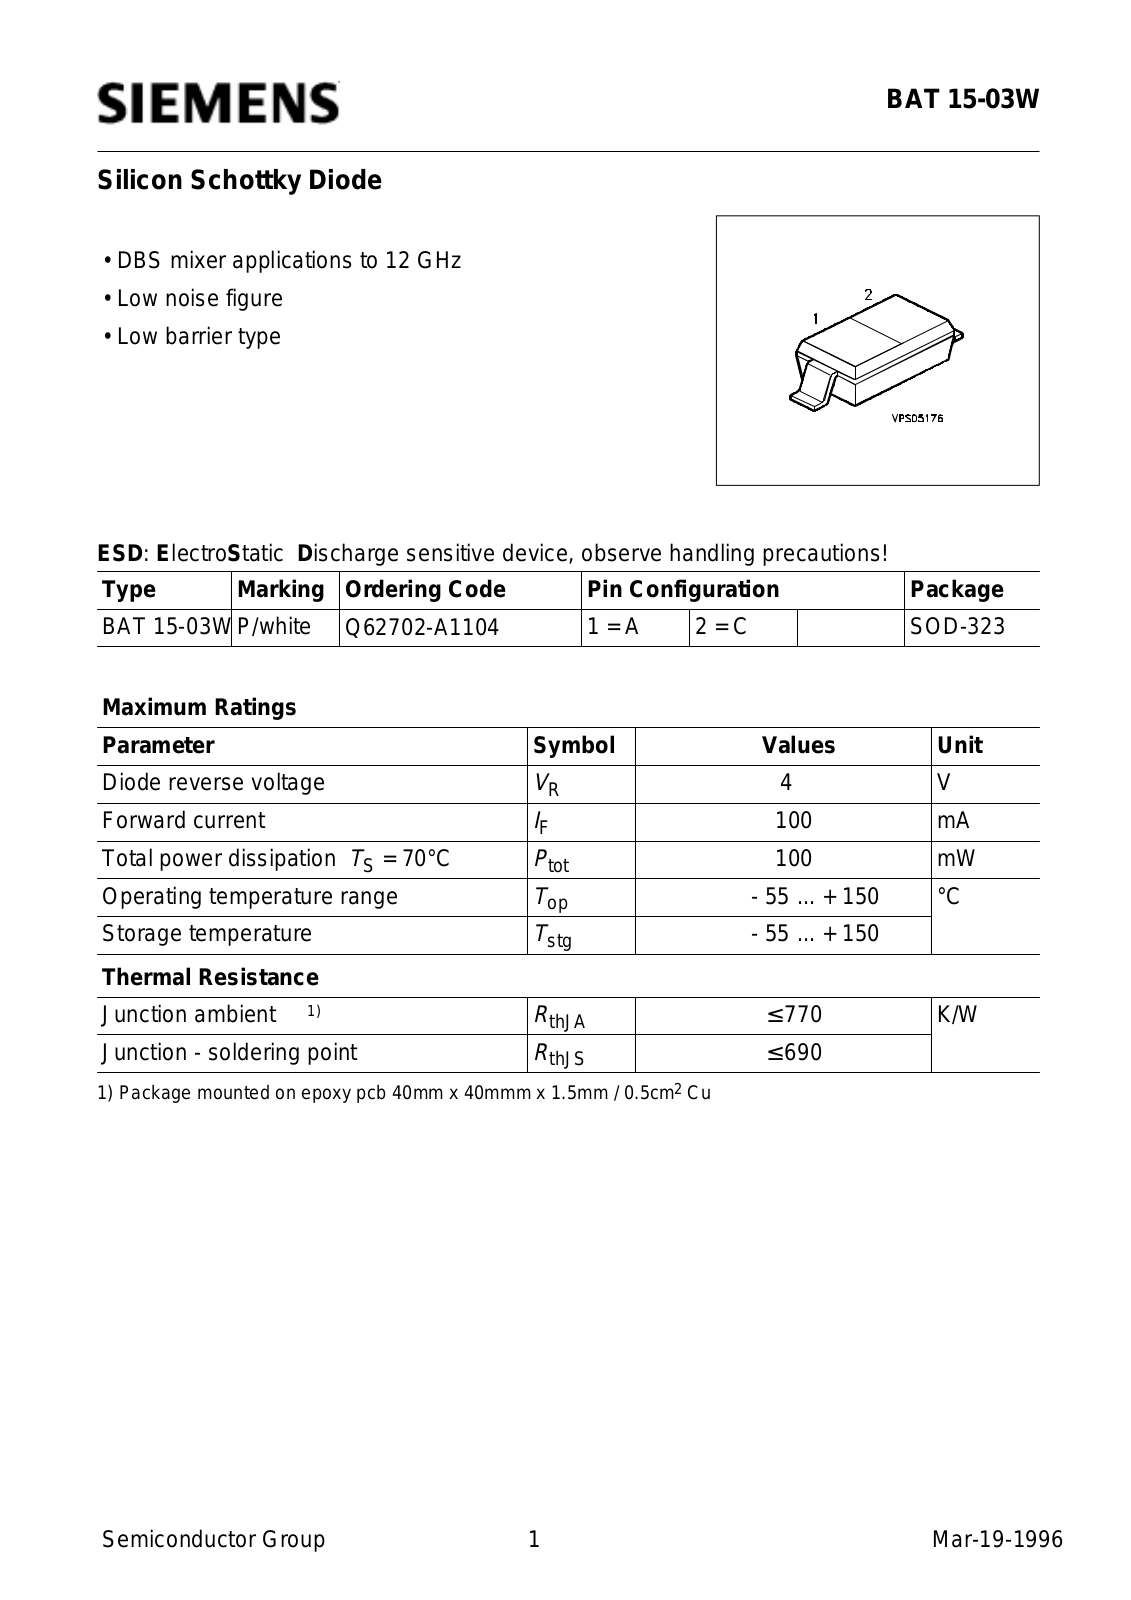 Siemens BAT15-03W Datasheet